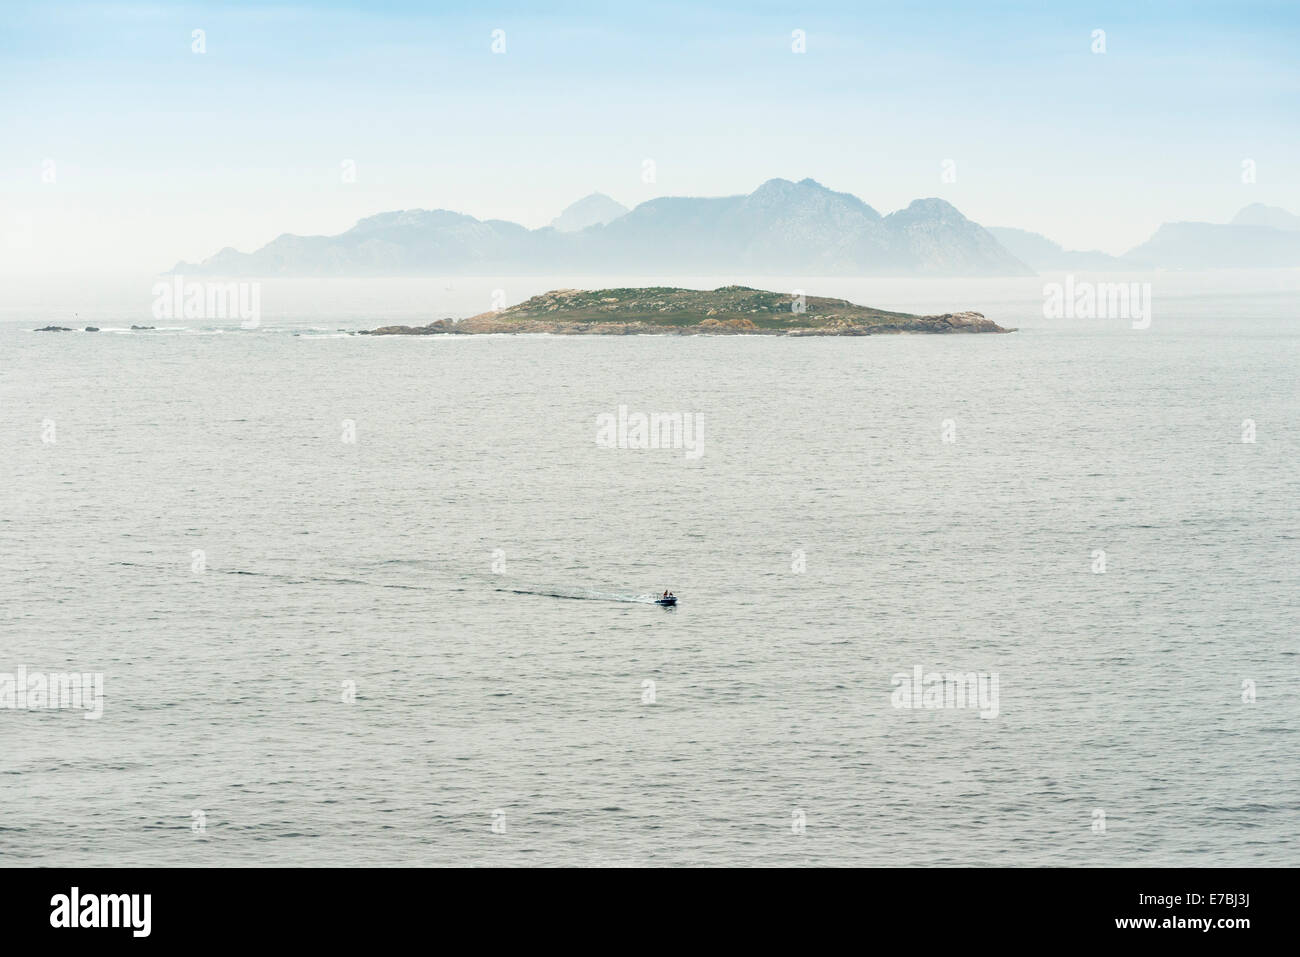 The Cíes Islands are an archipelago off the coast of Pontevedra in Galicia (Spain), in the mouth of the Ría de Vigo. Stock Photo